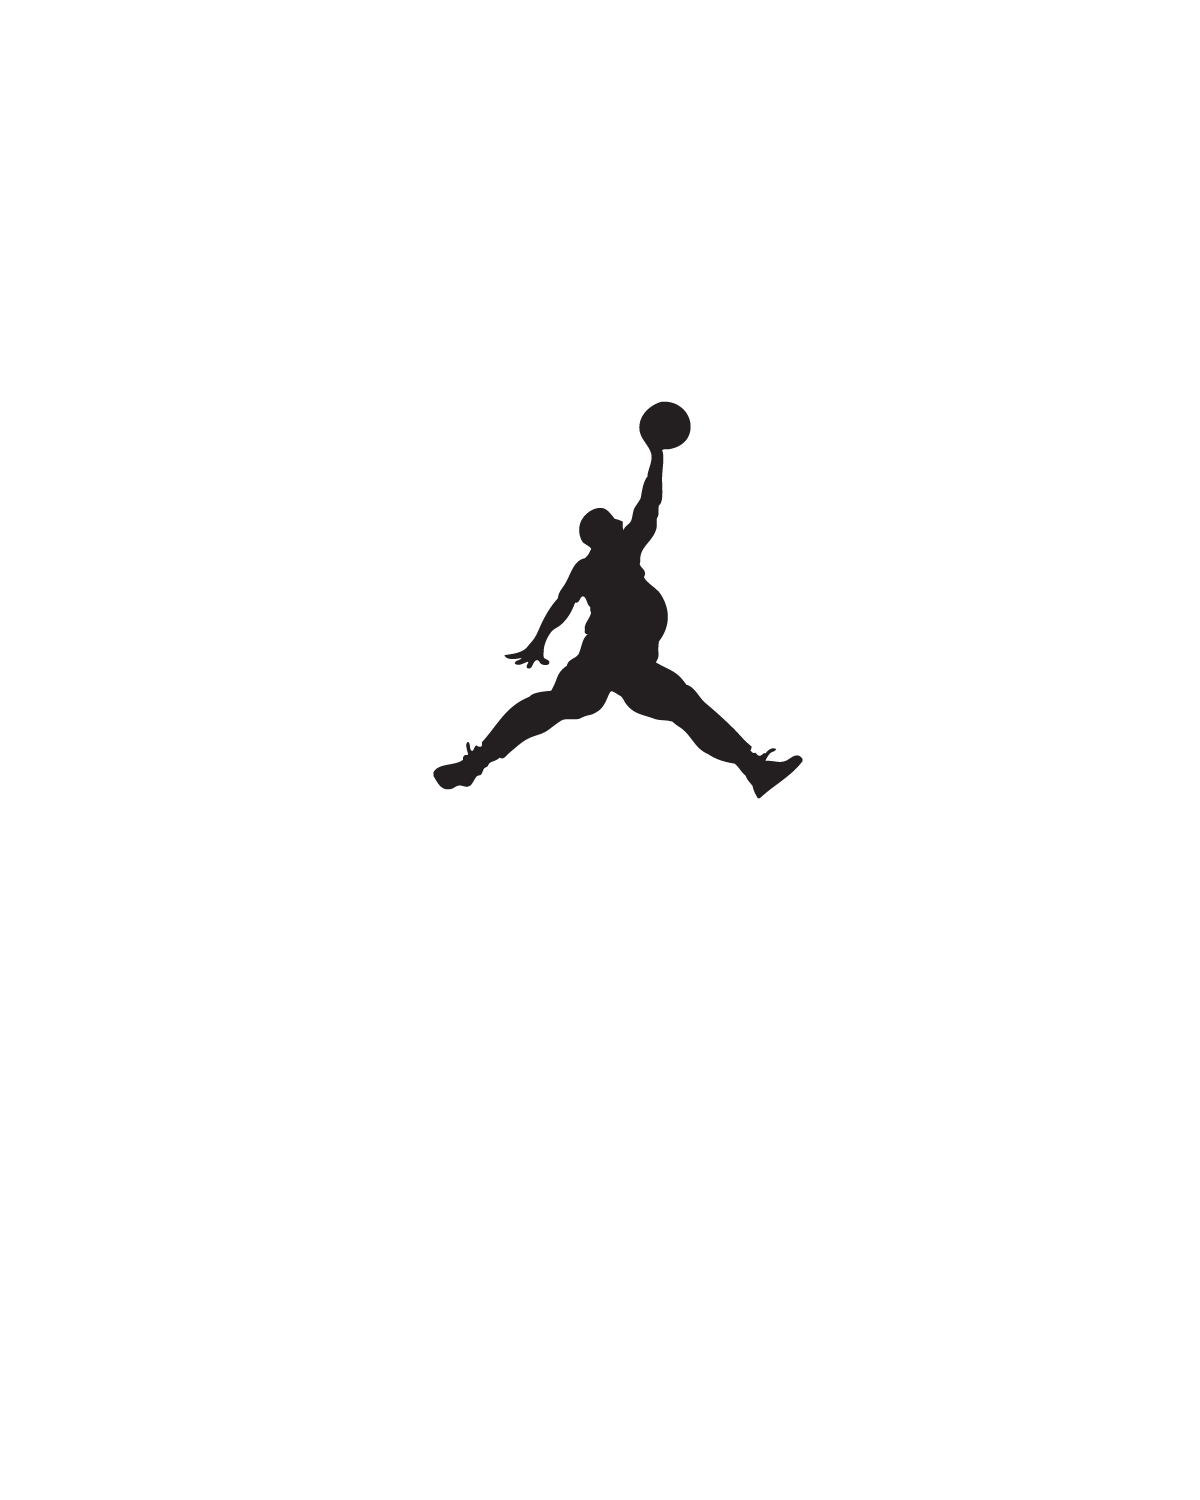 Michael Jordan and his brand pledge $100 million to Black Lives Matter ...